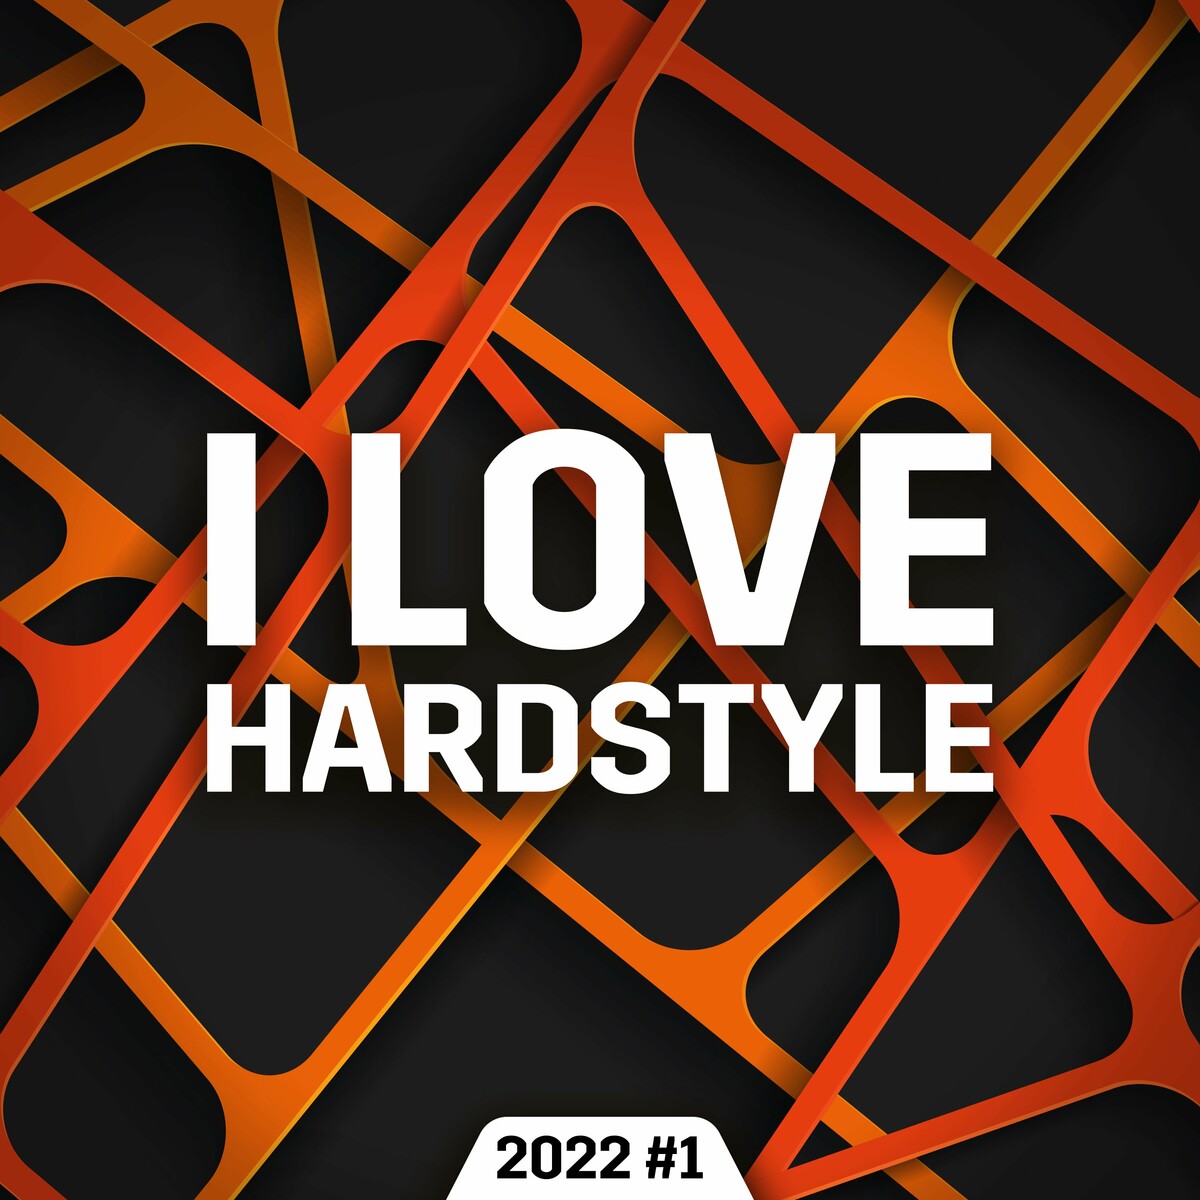 VA - I Love Hardstyle 2022 #1 (2022)